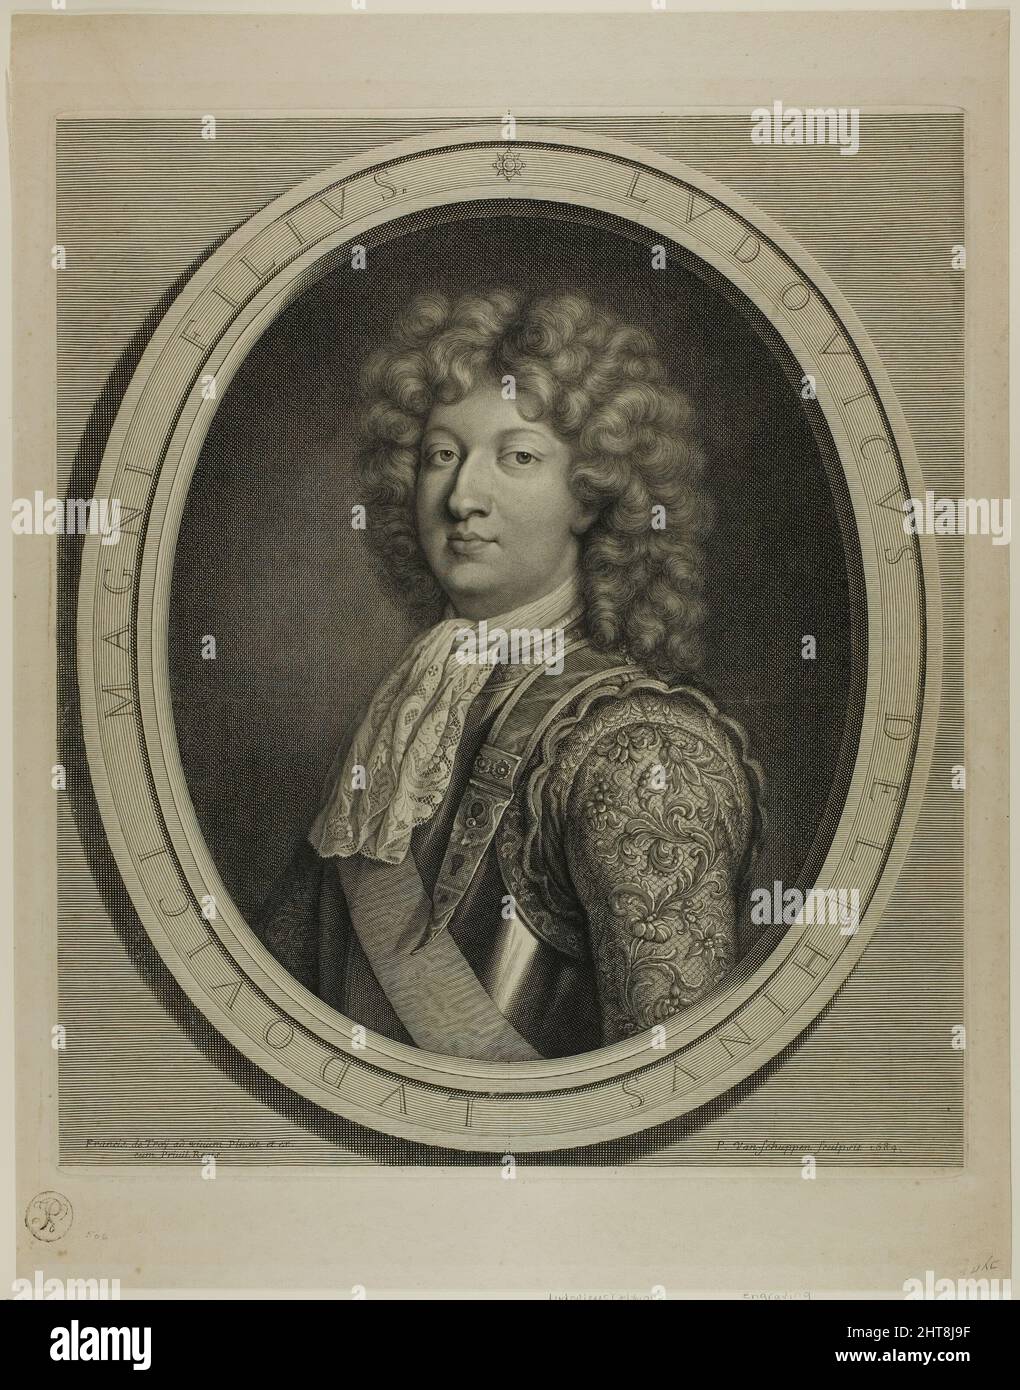 Ludovicus Delphinus, 1684. Stock Photo